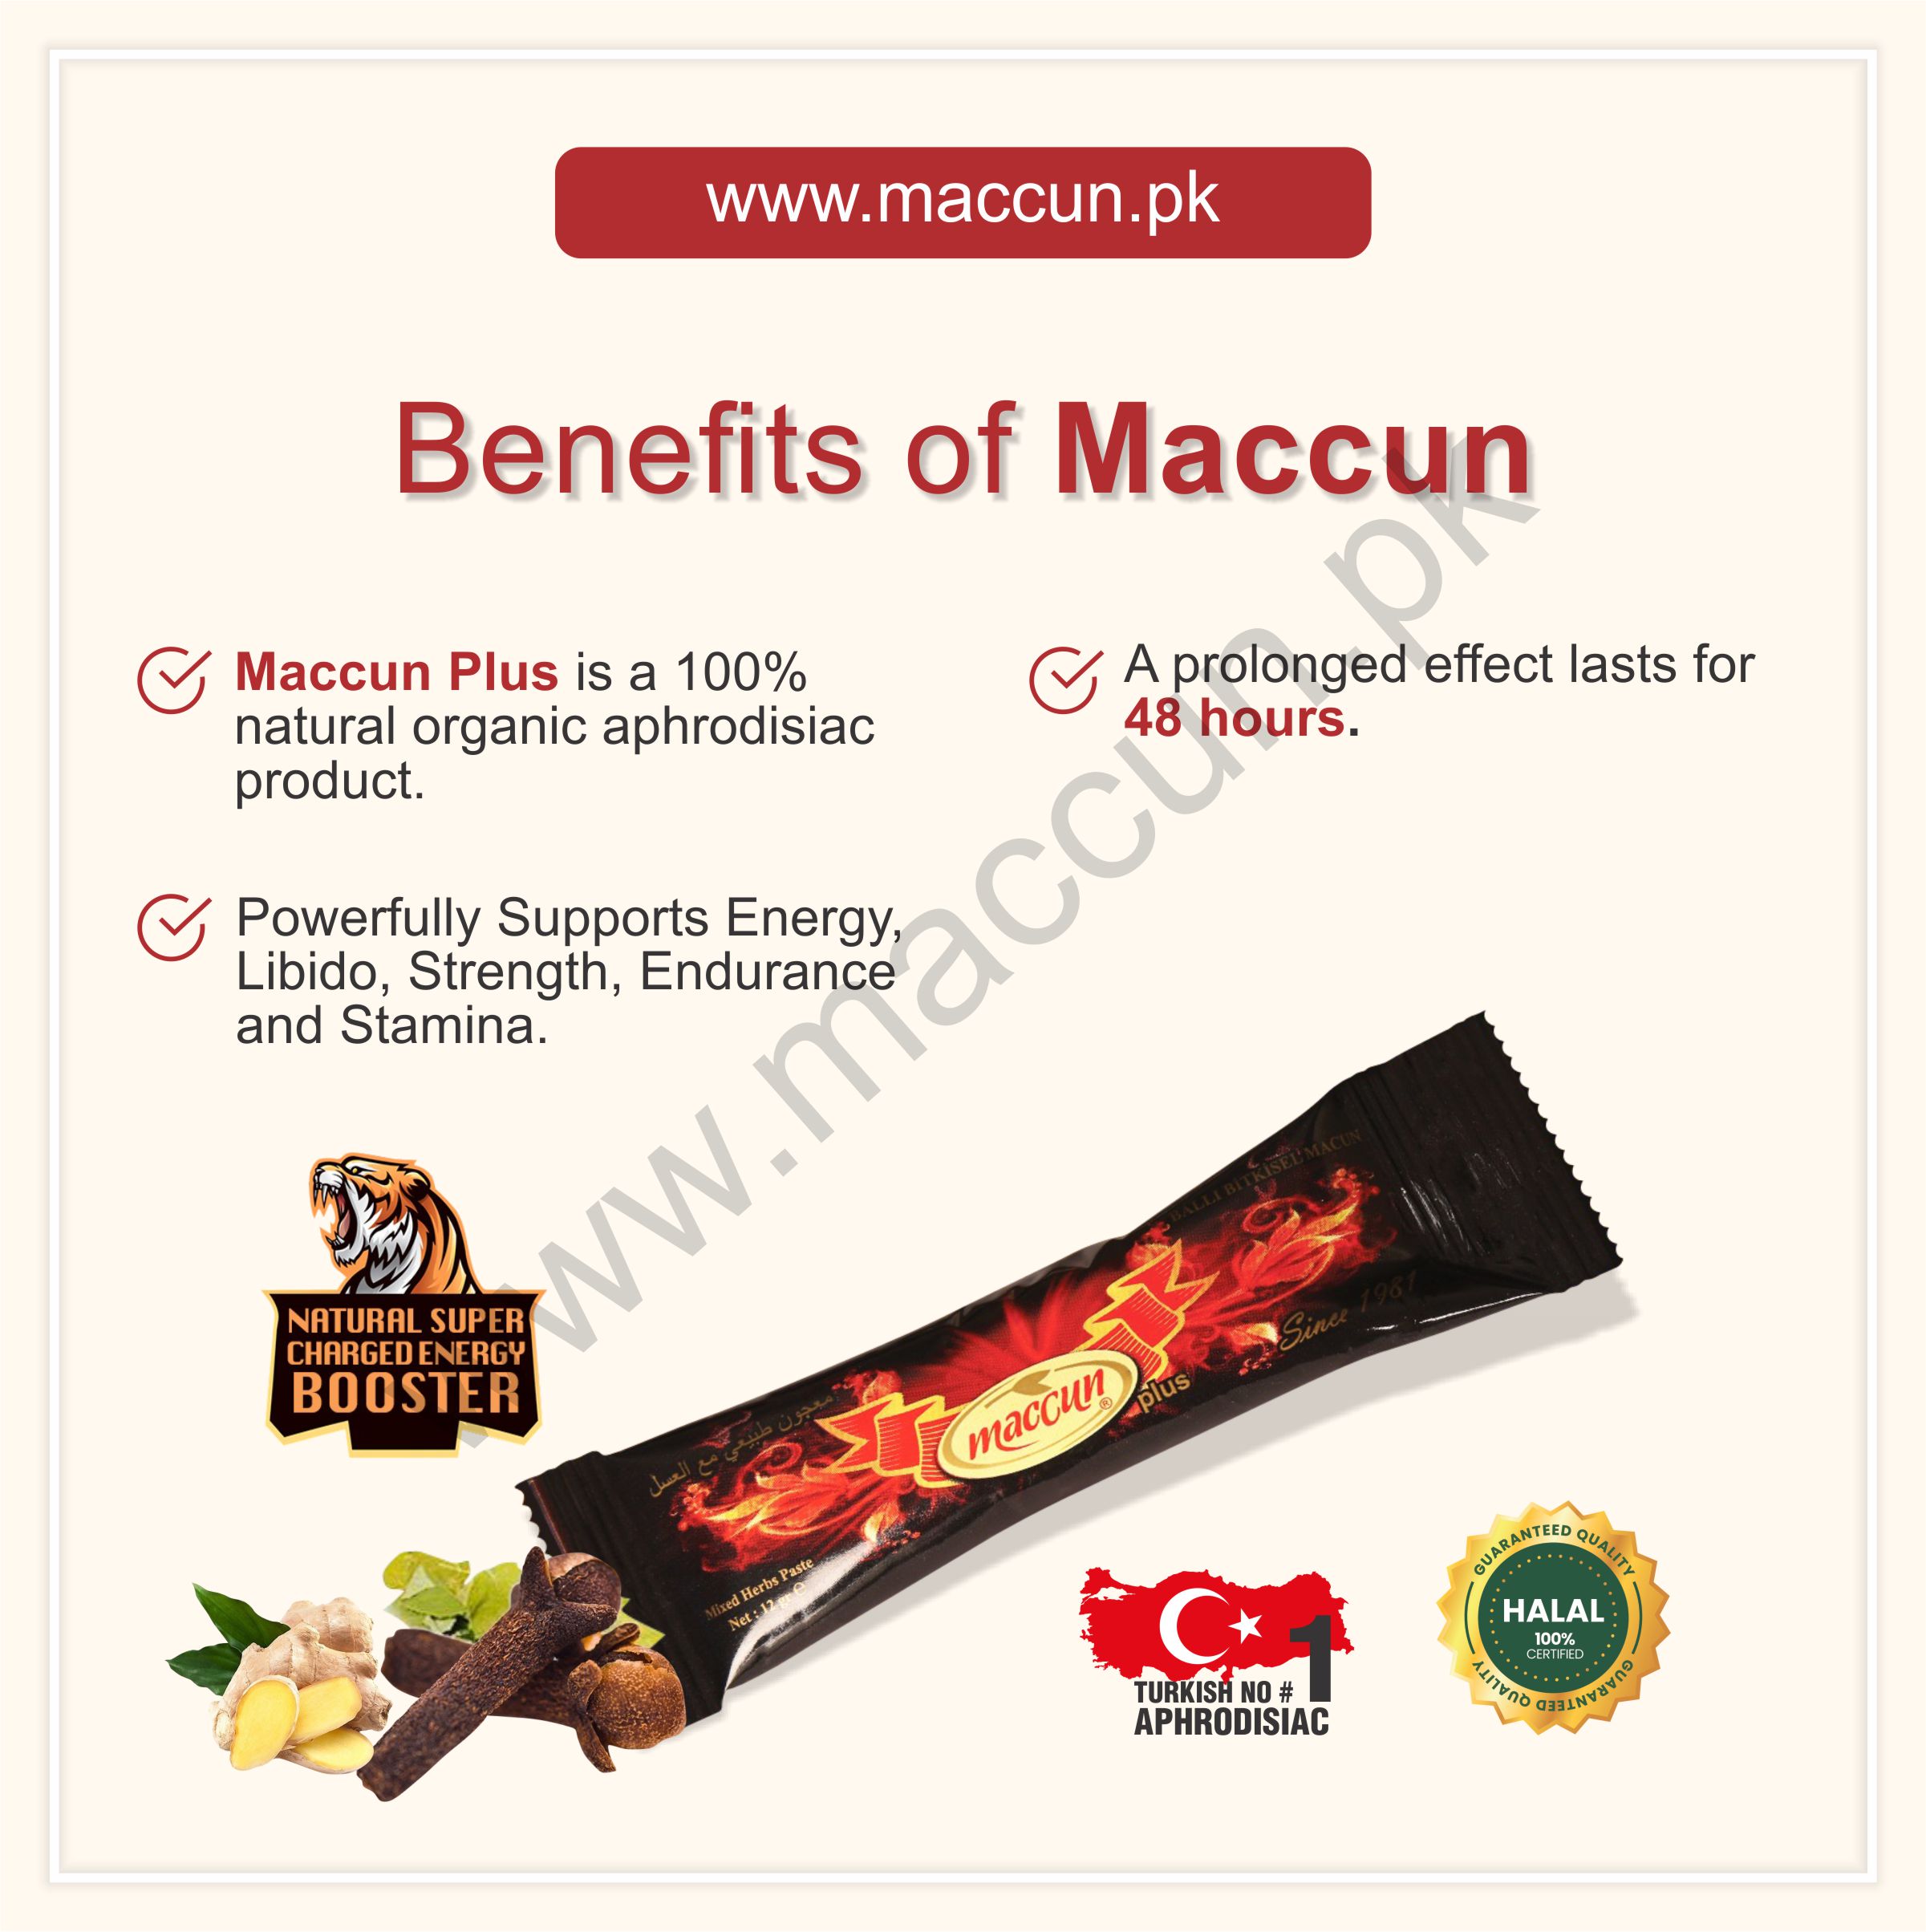 Maccun Plus Sachet Trail Pack In Pakistan | Maccun.pk